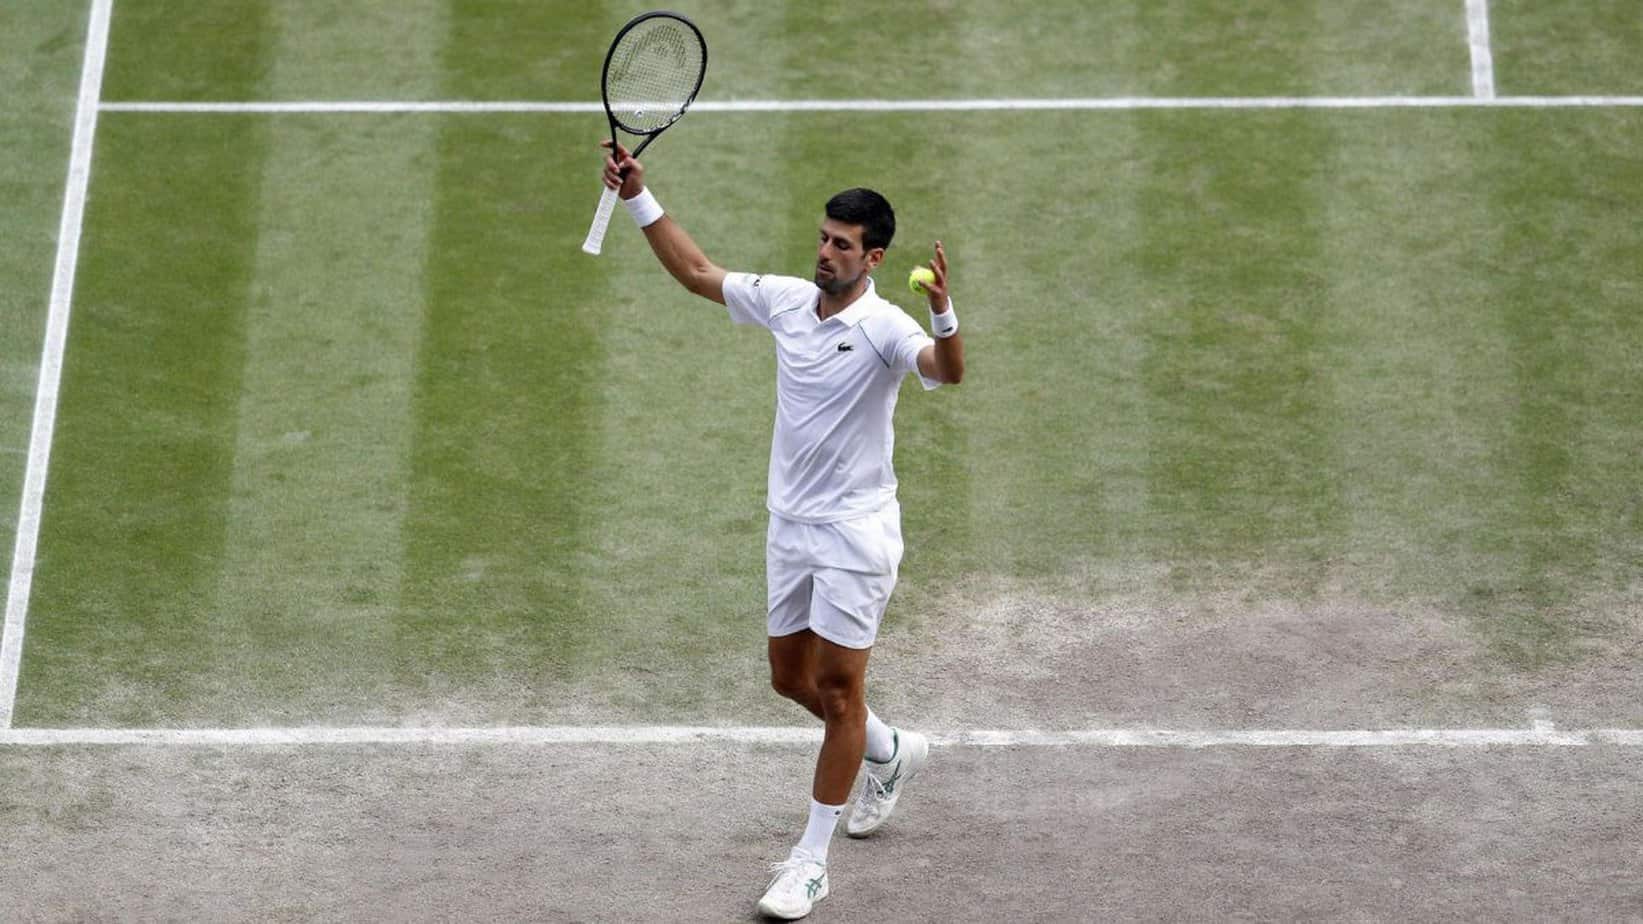 Wimbledon Final: Novak Djokovic vs. Nick Kyrgios – Preview and Betting Odds